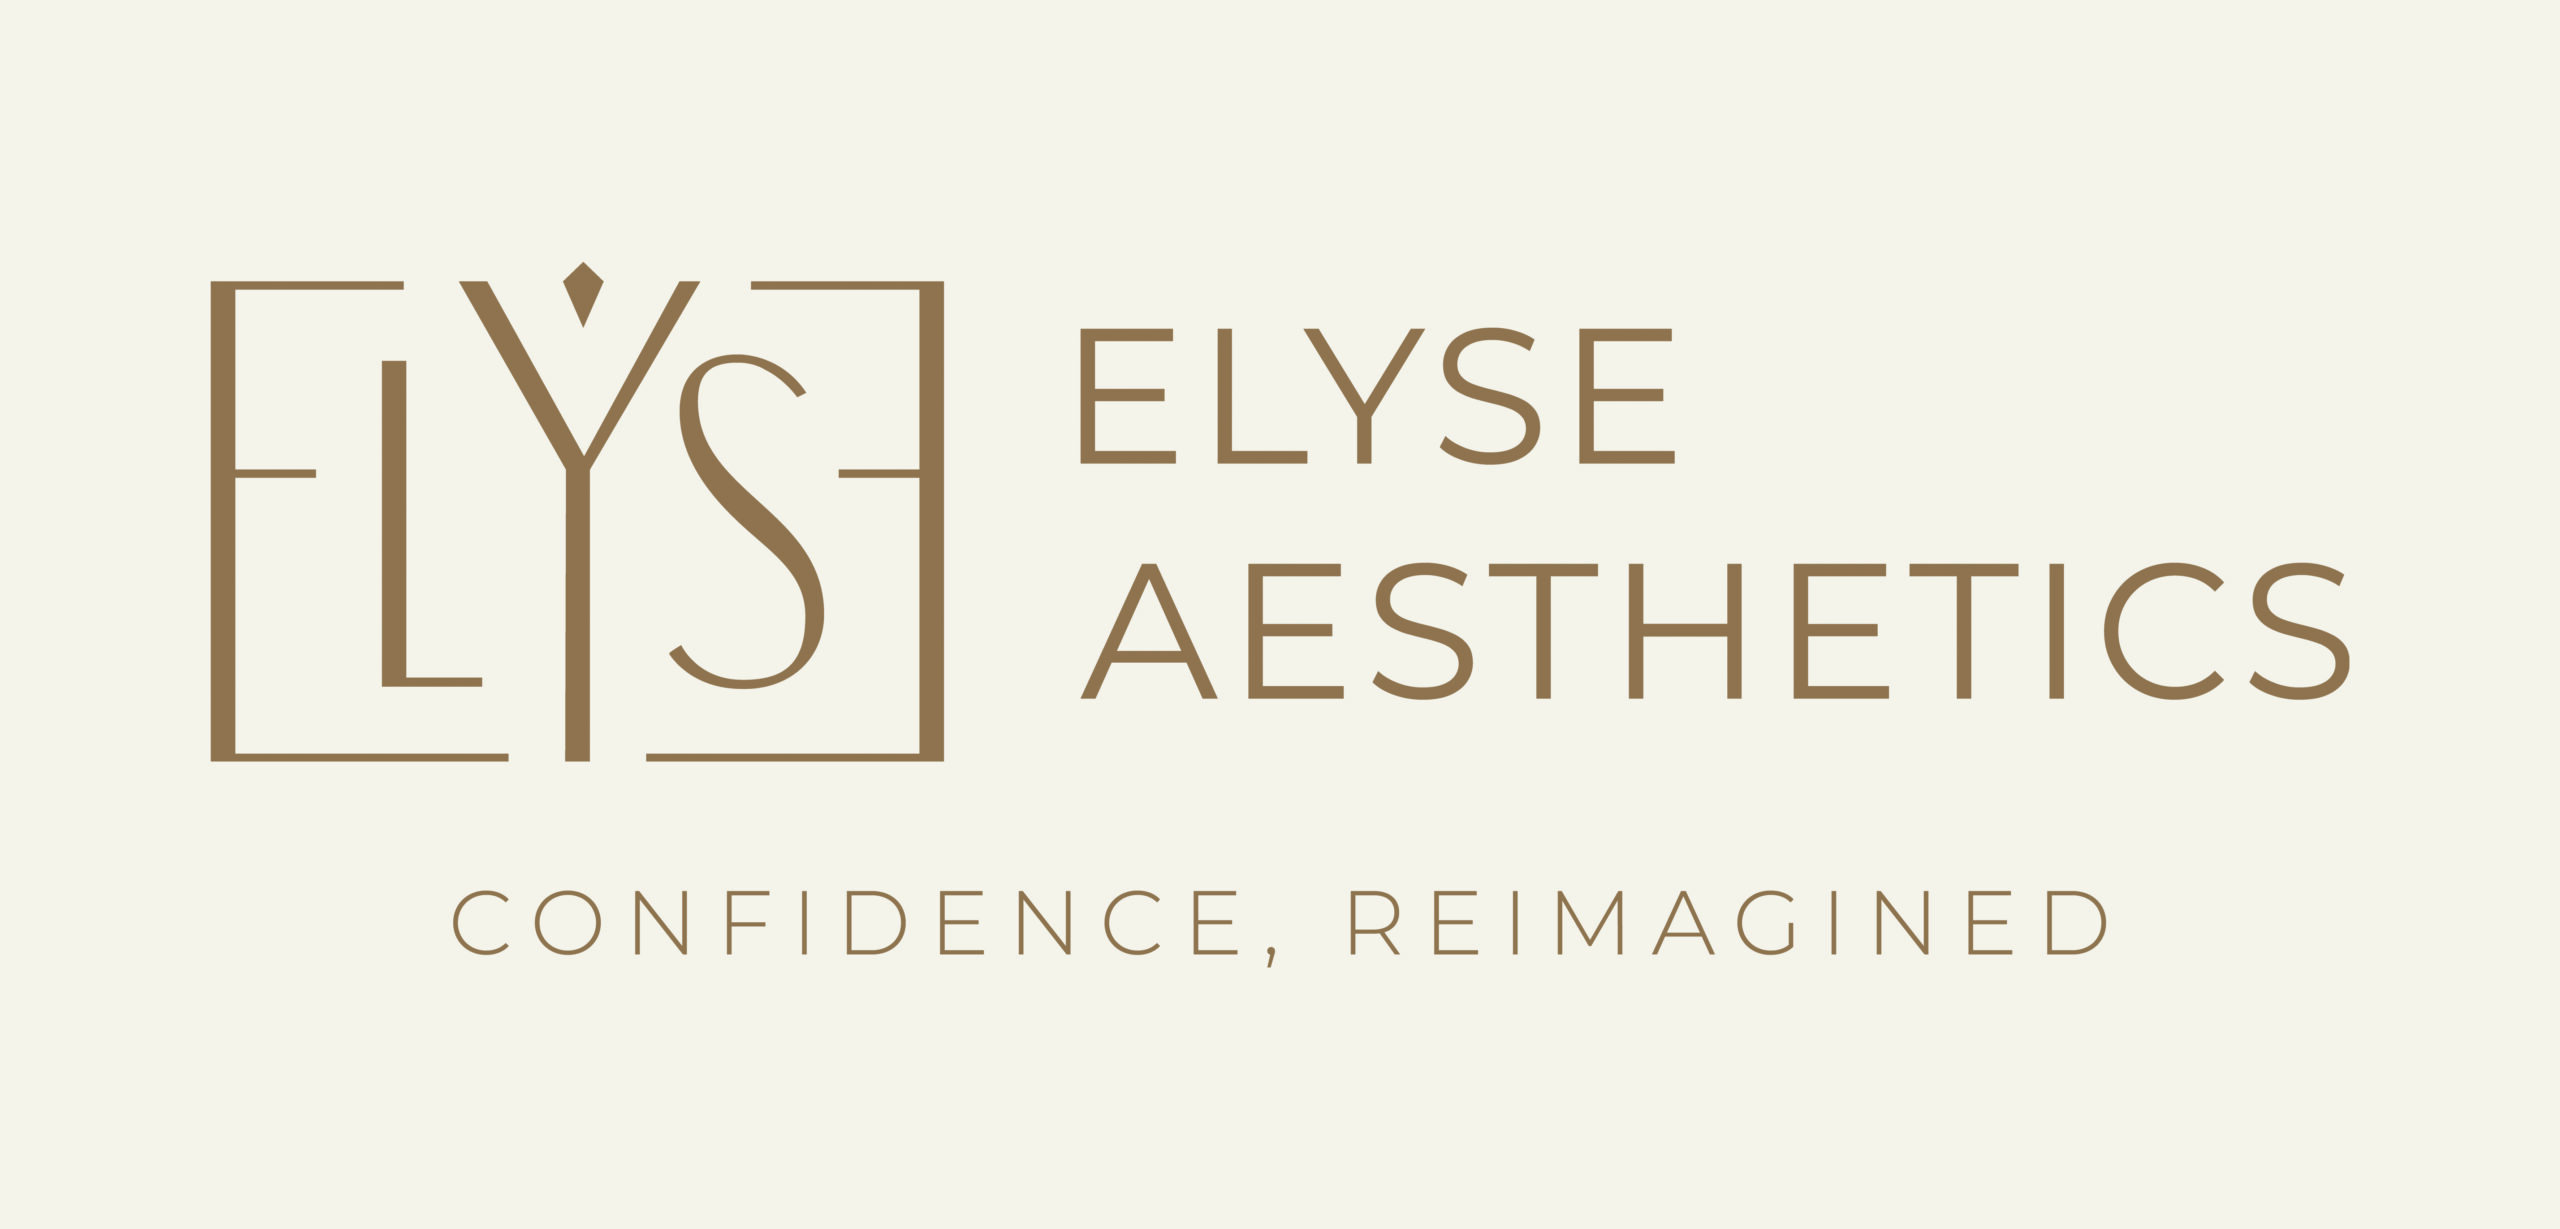 Elyse Aesthetics confidence